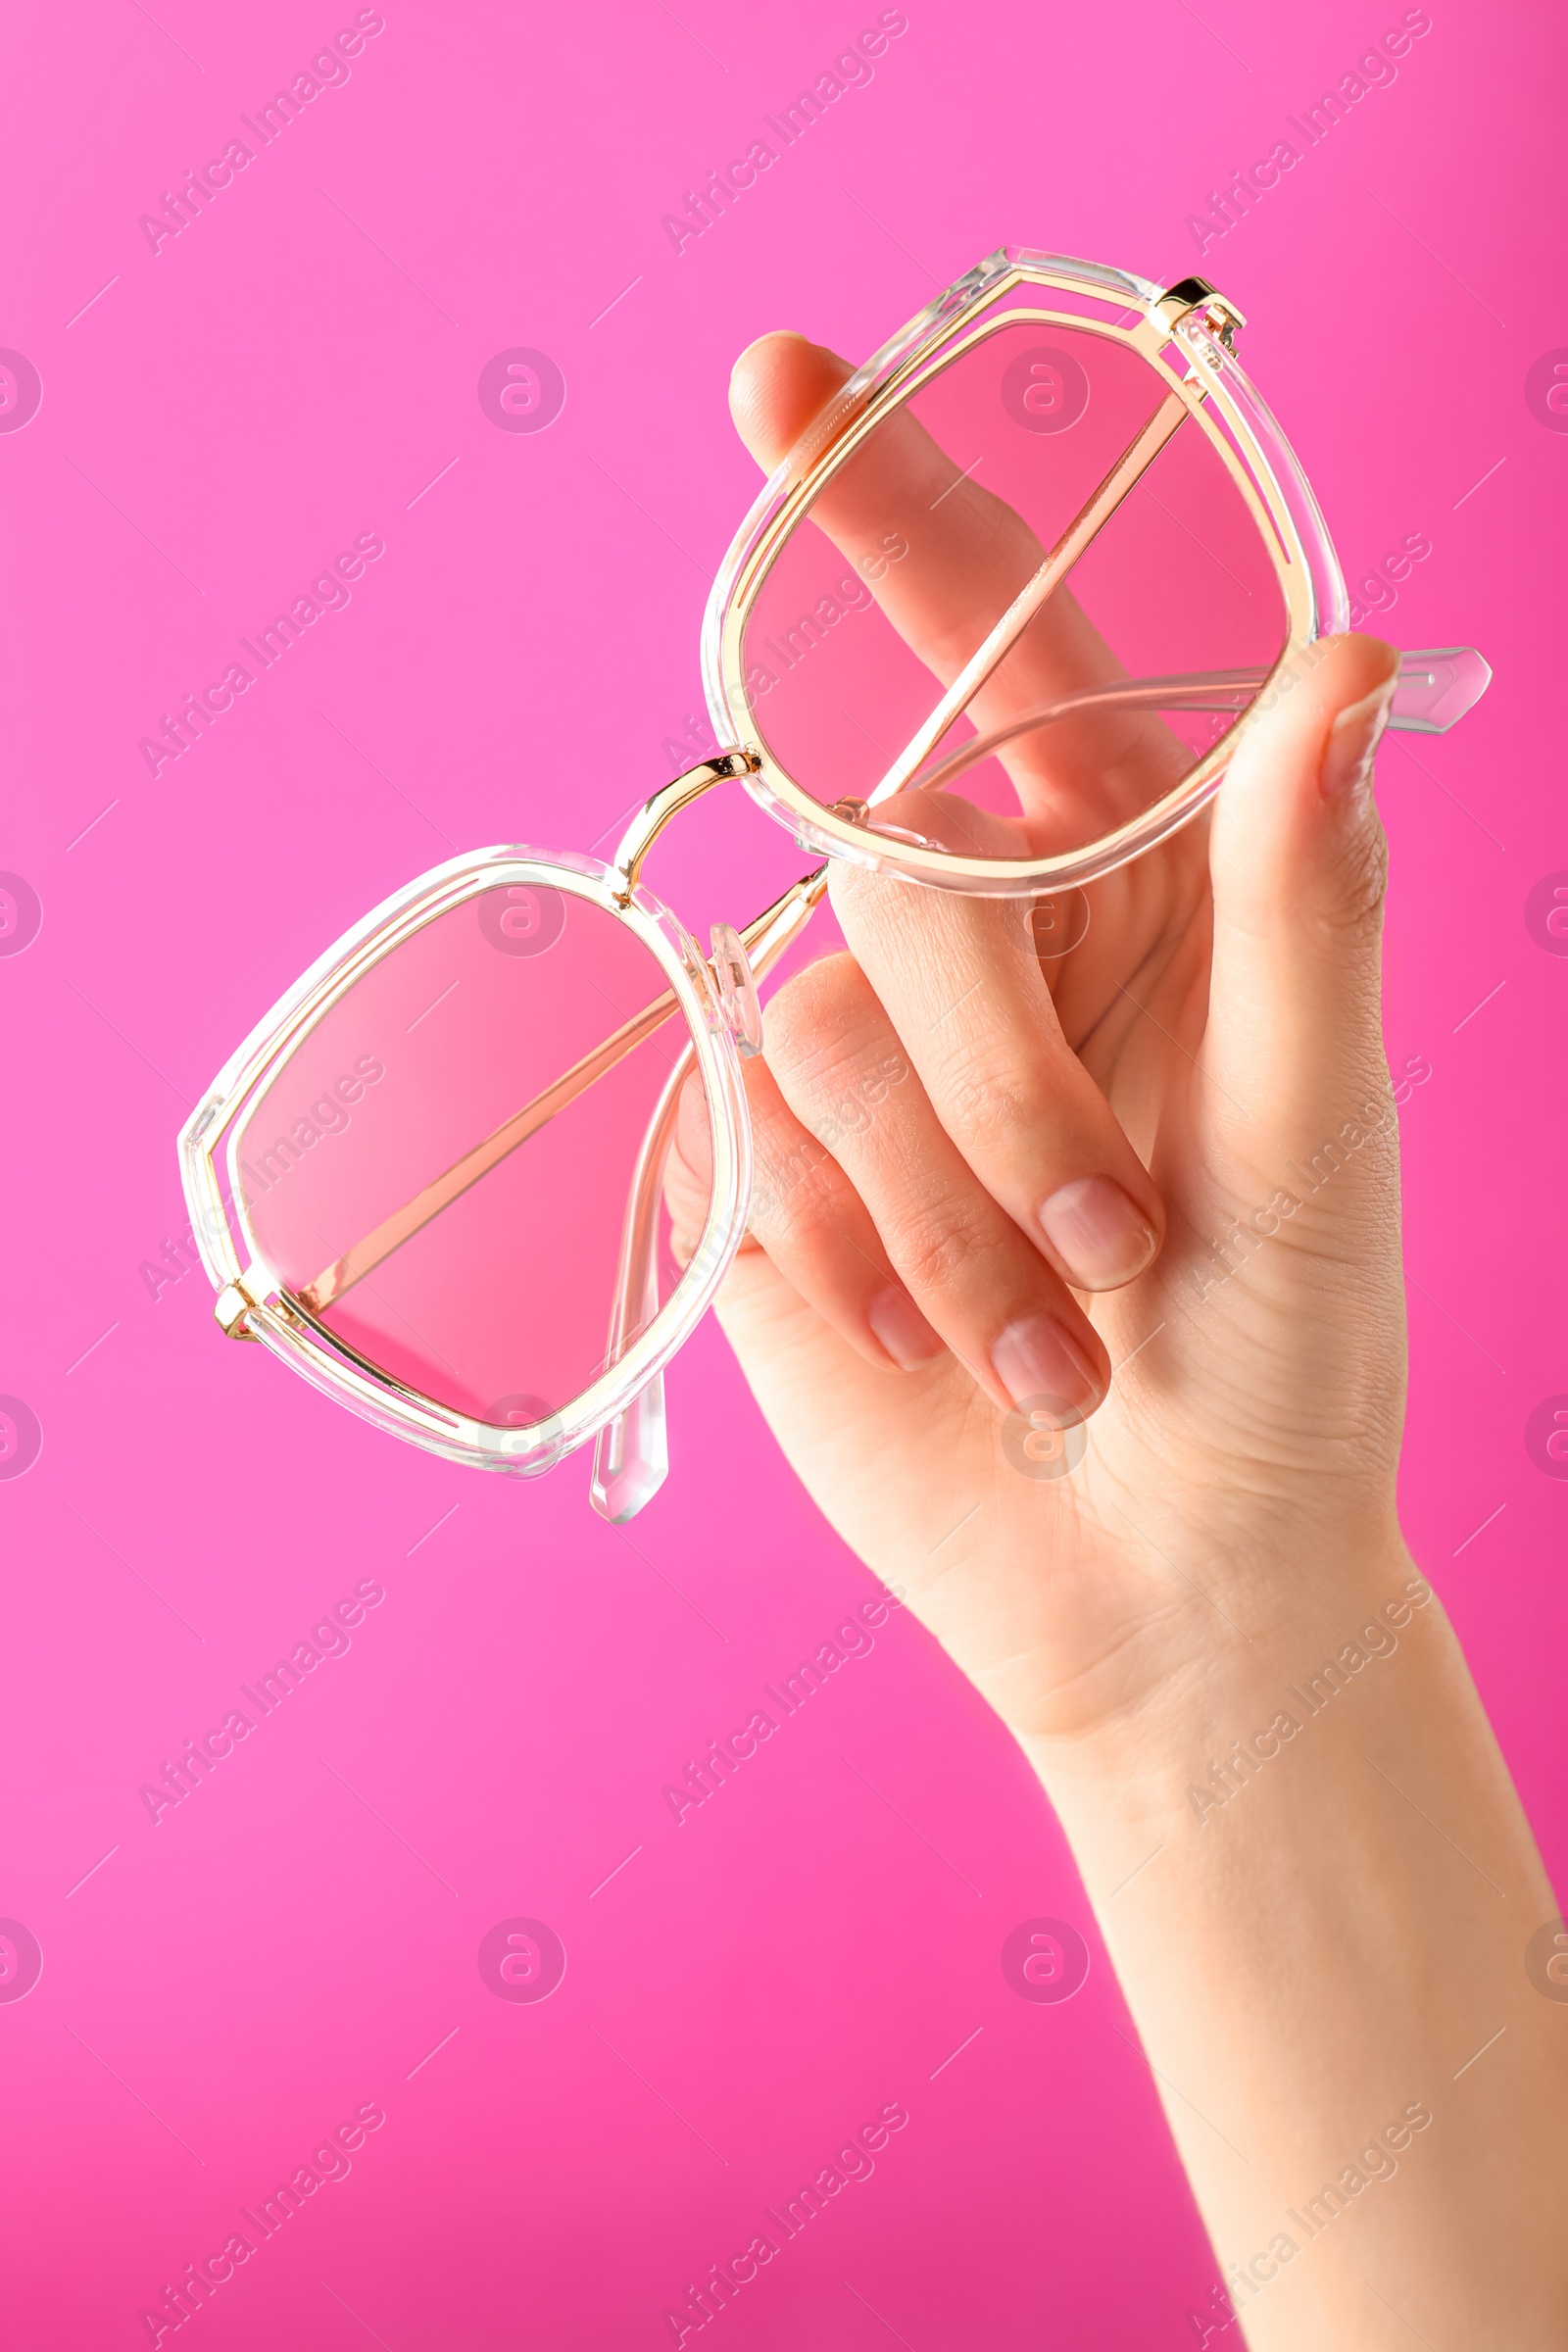 Photo of Woman holding stylish sunglasses on pink background, closeup of hand